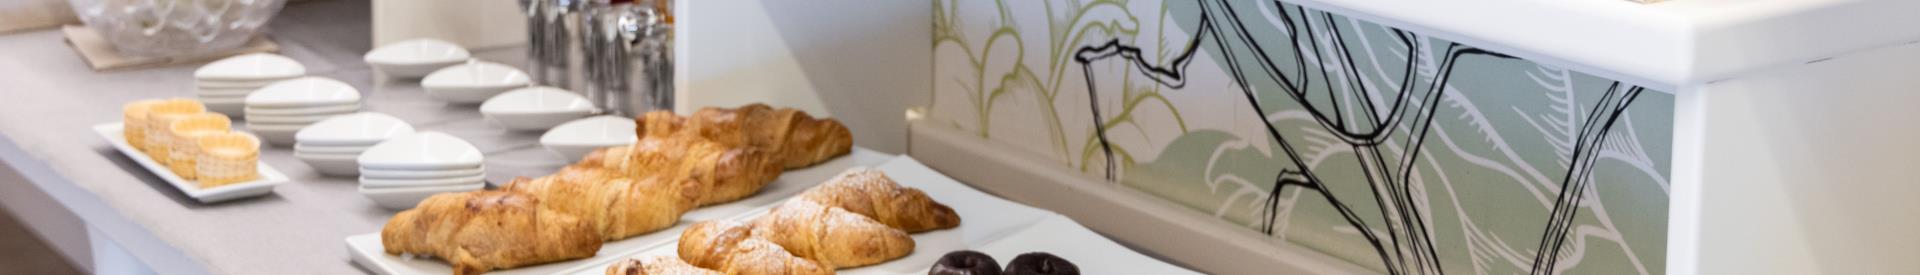 croissant breakfast at BW Hotel Crimea